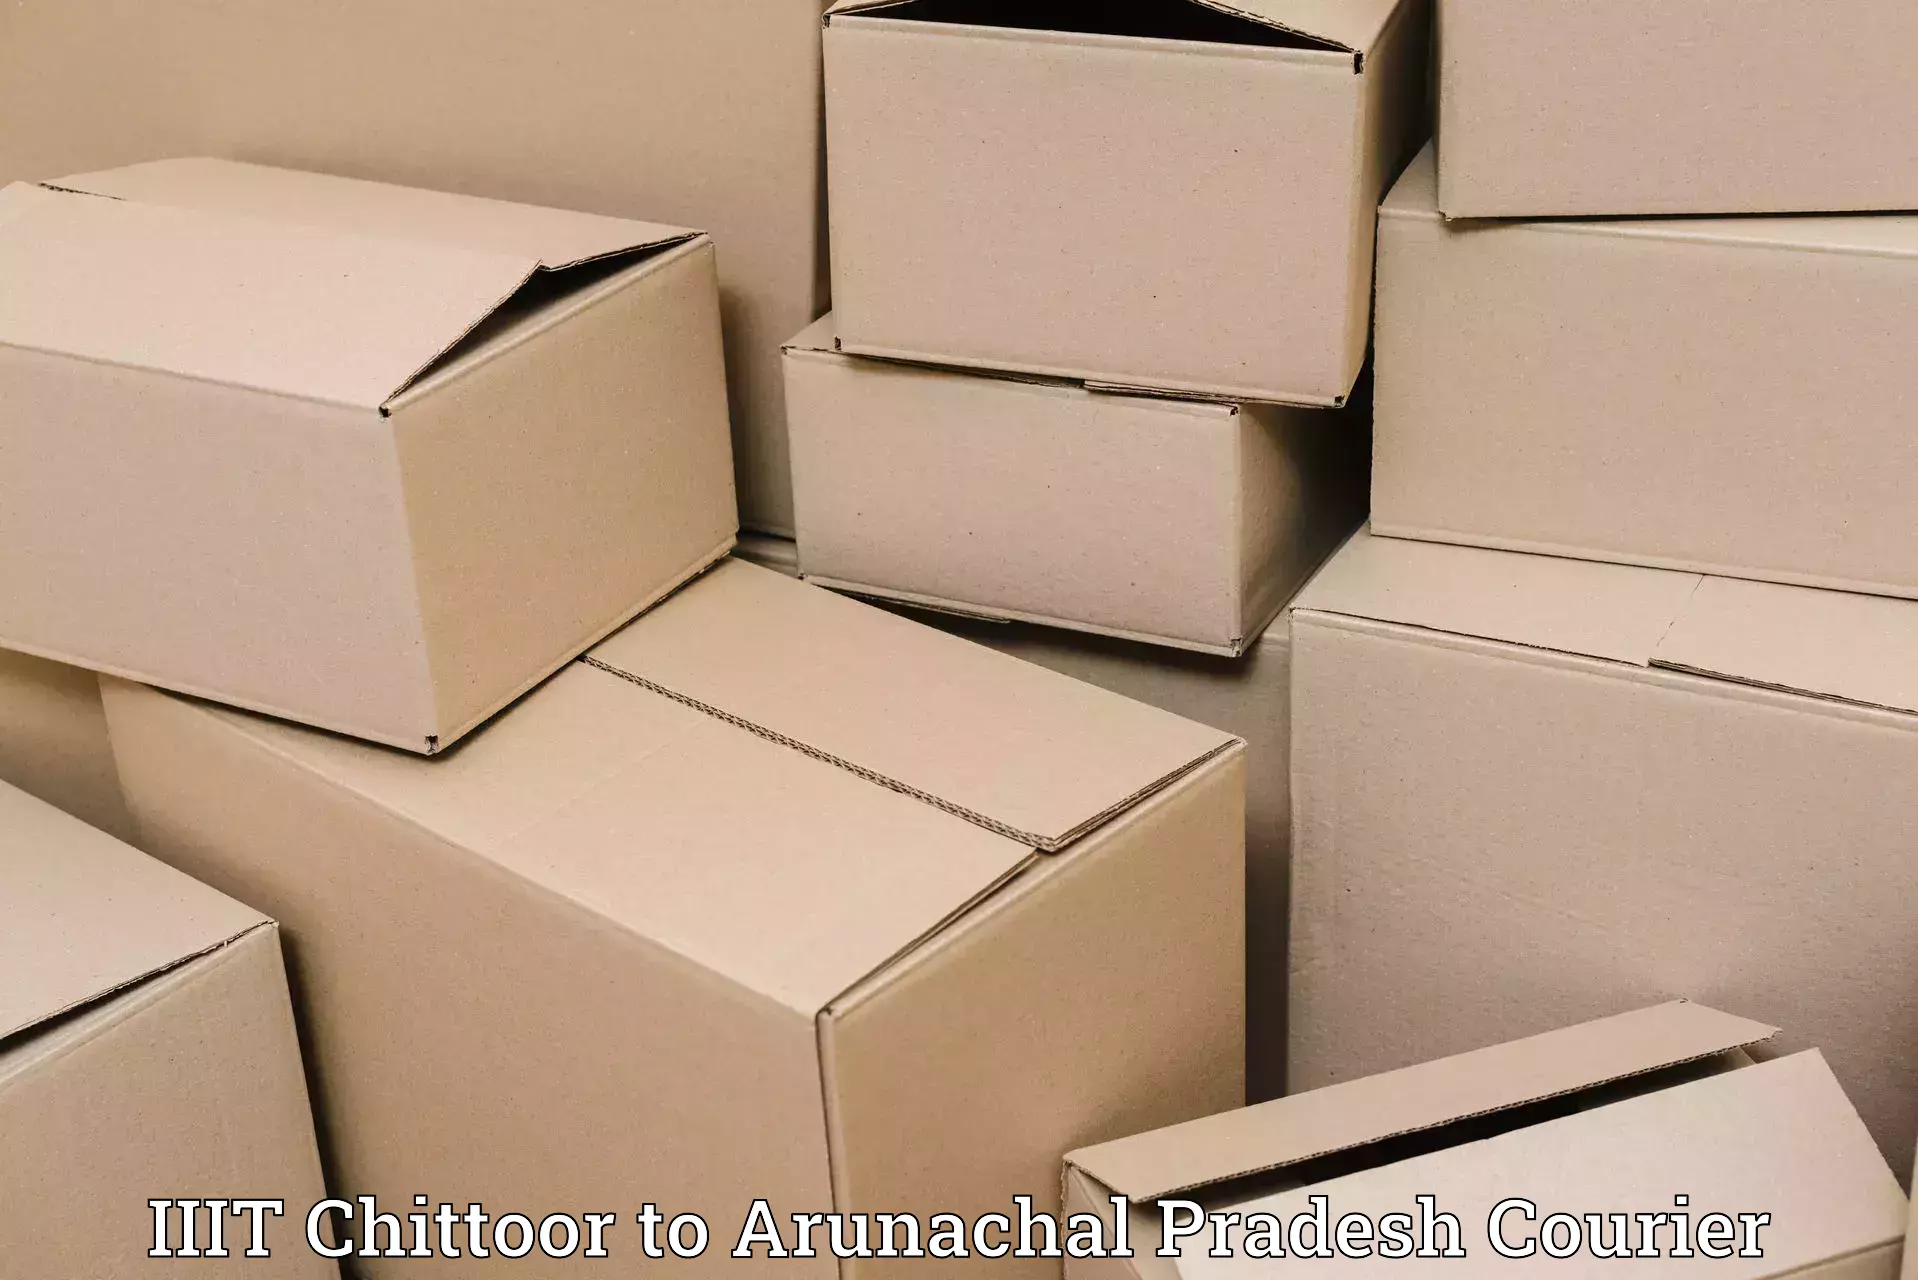 Large package courier IIIT Chittoor to Arunachal Pradesh